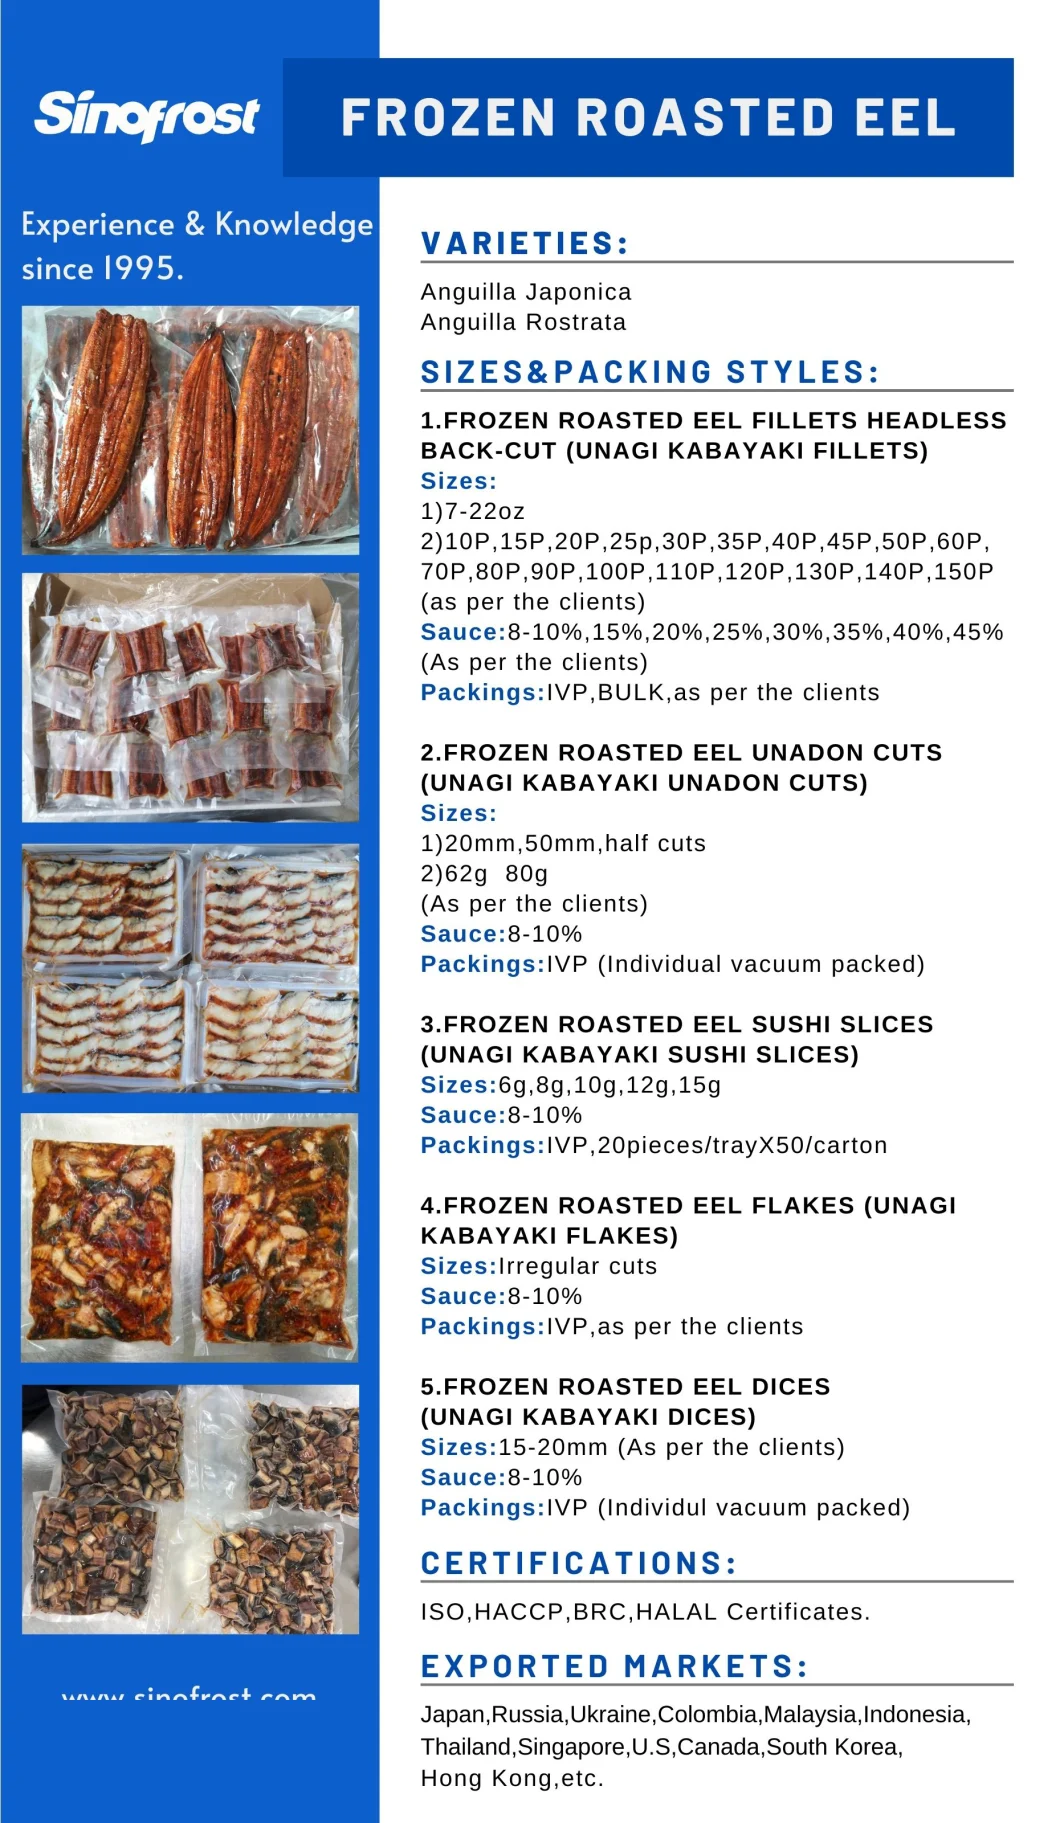 Unagi Kabayaki, Frozen Roasted Eel, Frozen Prepared Eel, Frozen Broiled Eel, Frozen Grilled Eel, Packed in Bulk/Ivp, Fillets/Cuts/Slices/Dices/Flakes